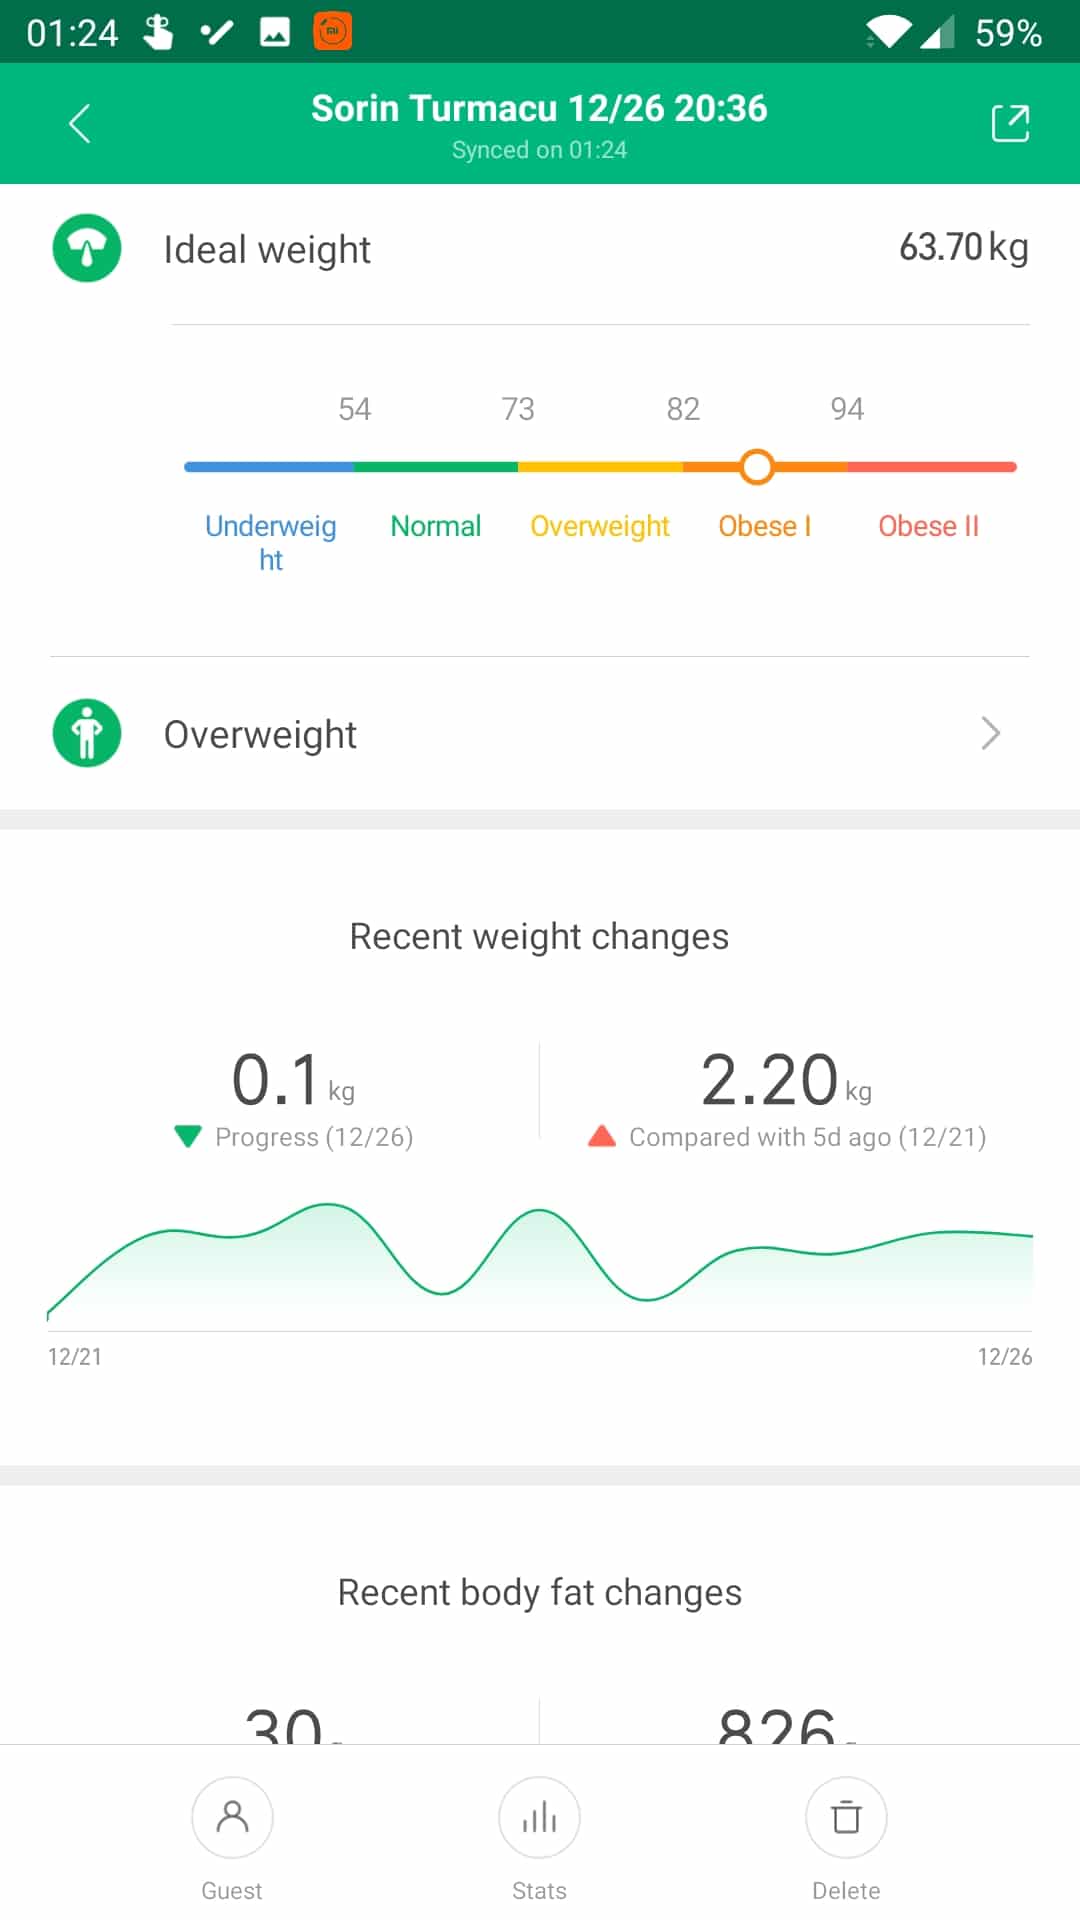 Xiaomi Mi Body Composition Scale VS Huawei Scale 3 - Your Fitness Companion  